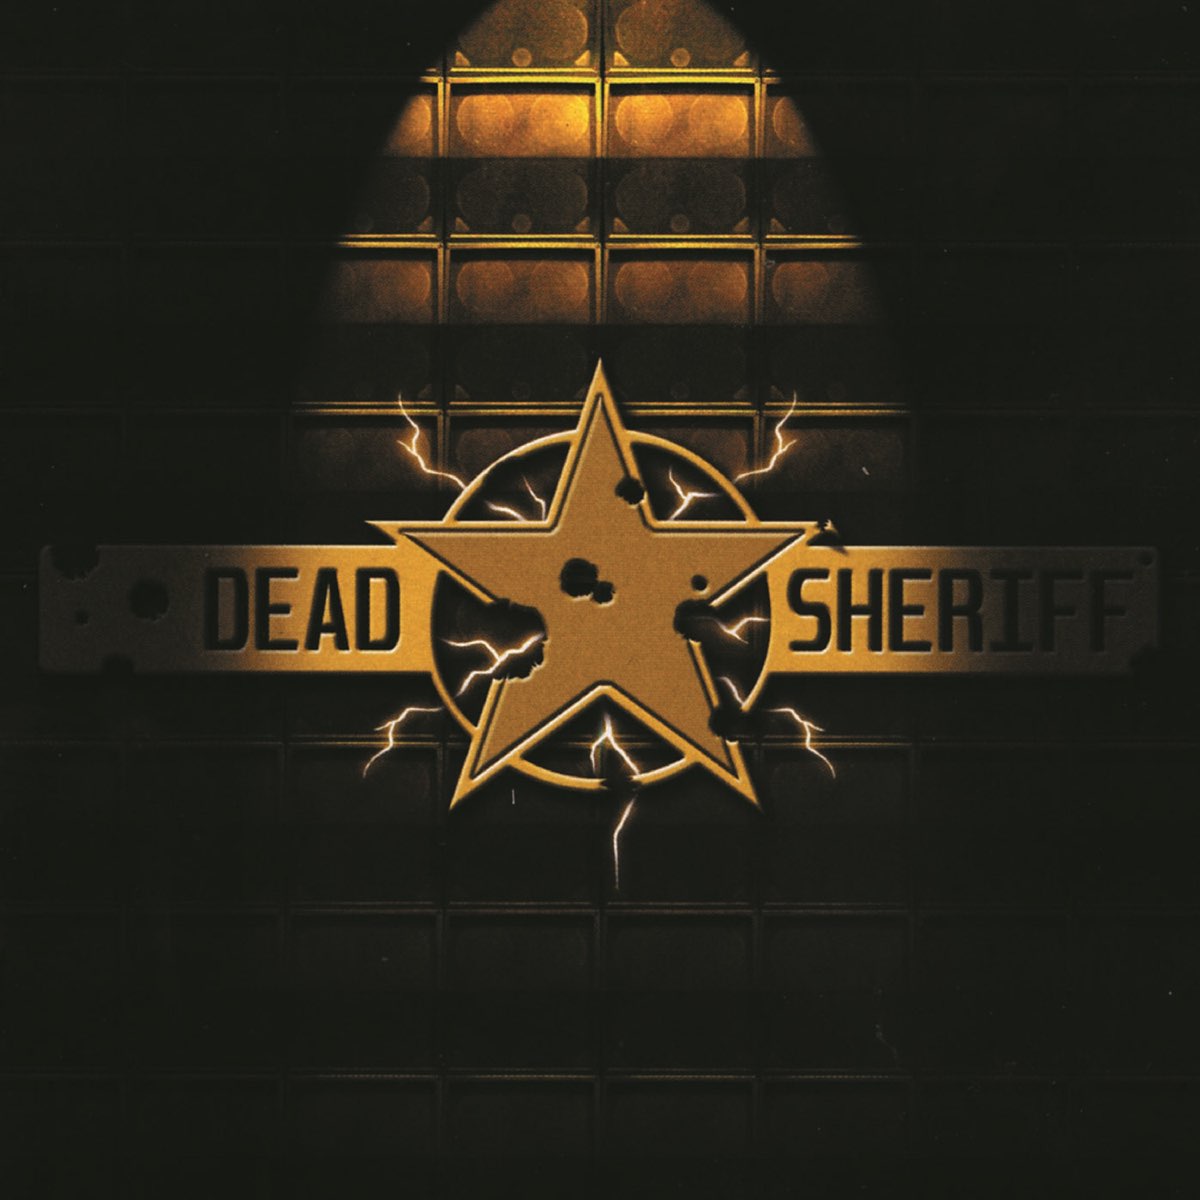 Sheriff's in Trouble. Death Wish Sheriff.